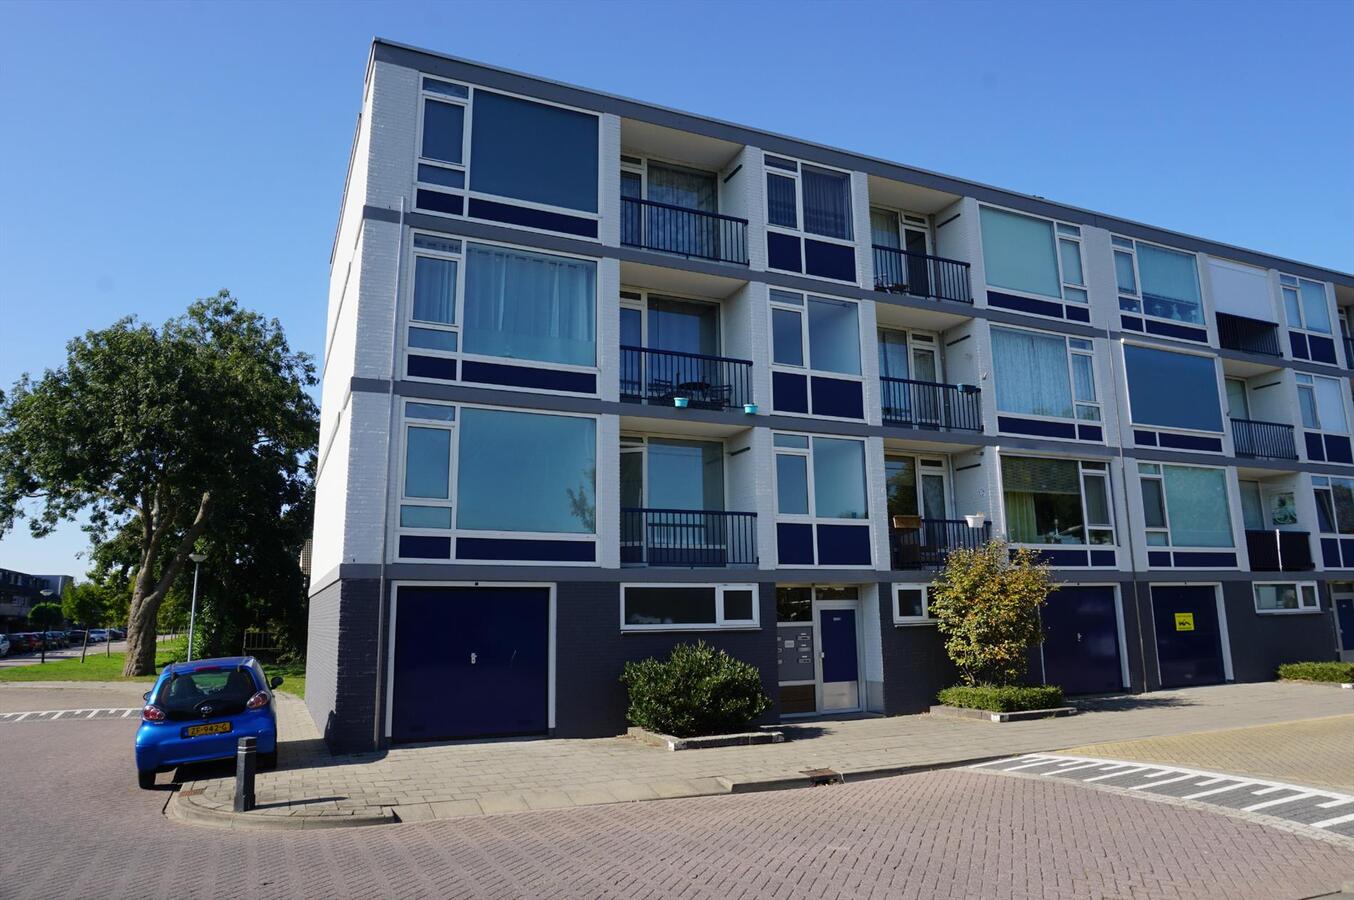 Appartement verkocht in Alblasserdam